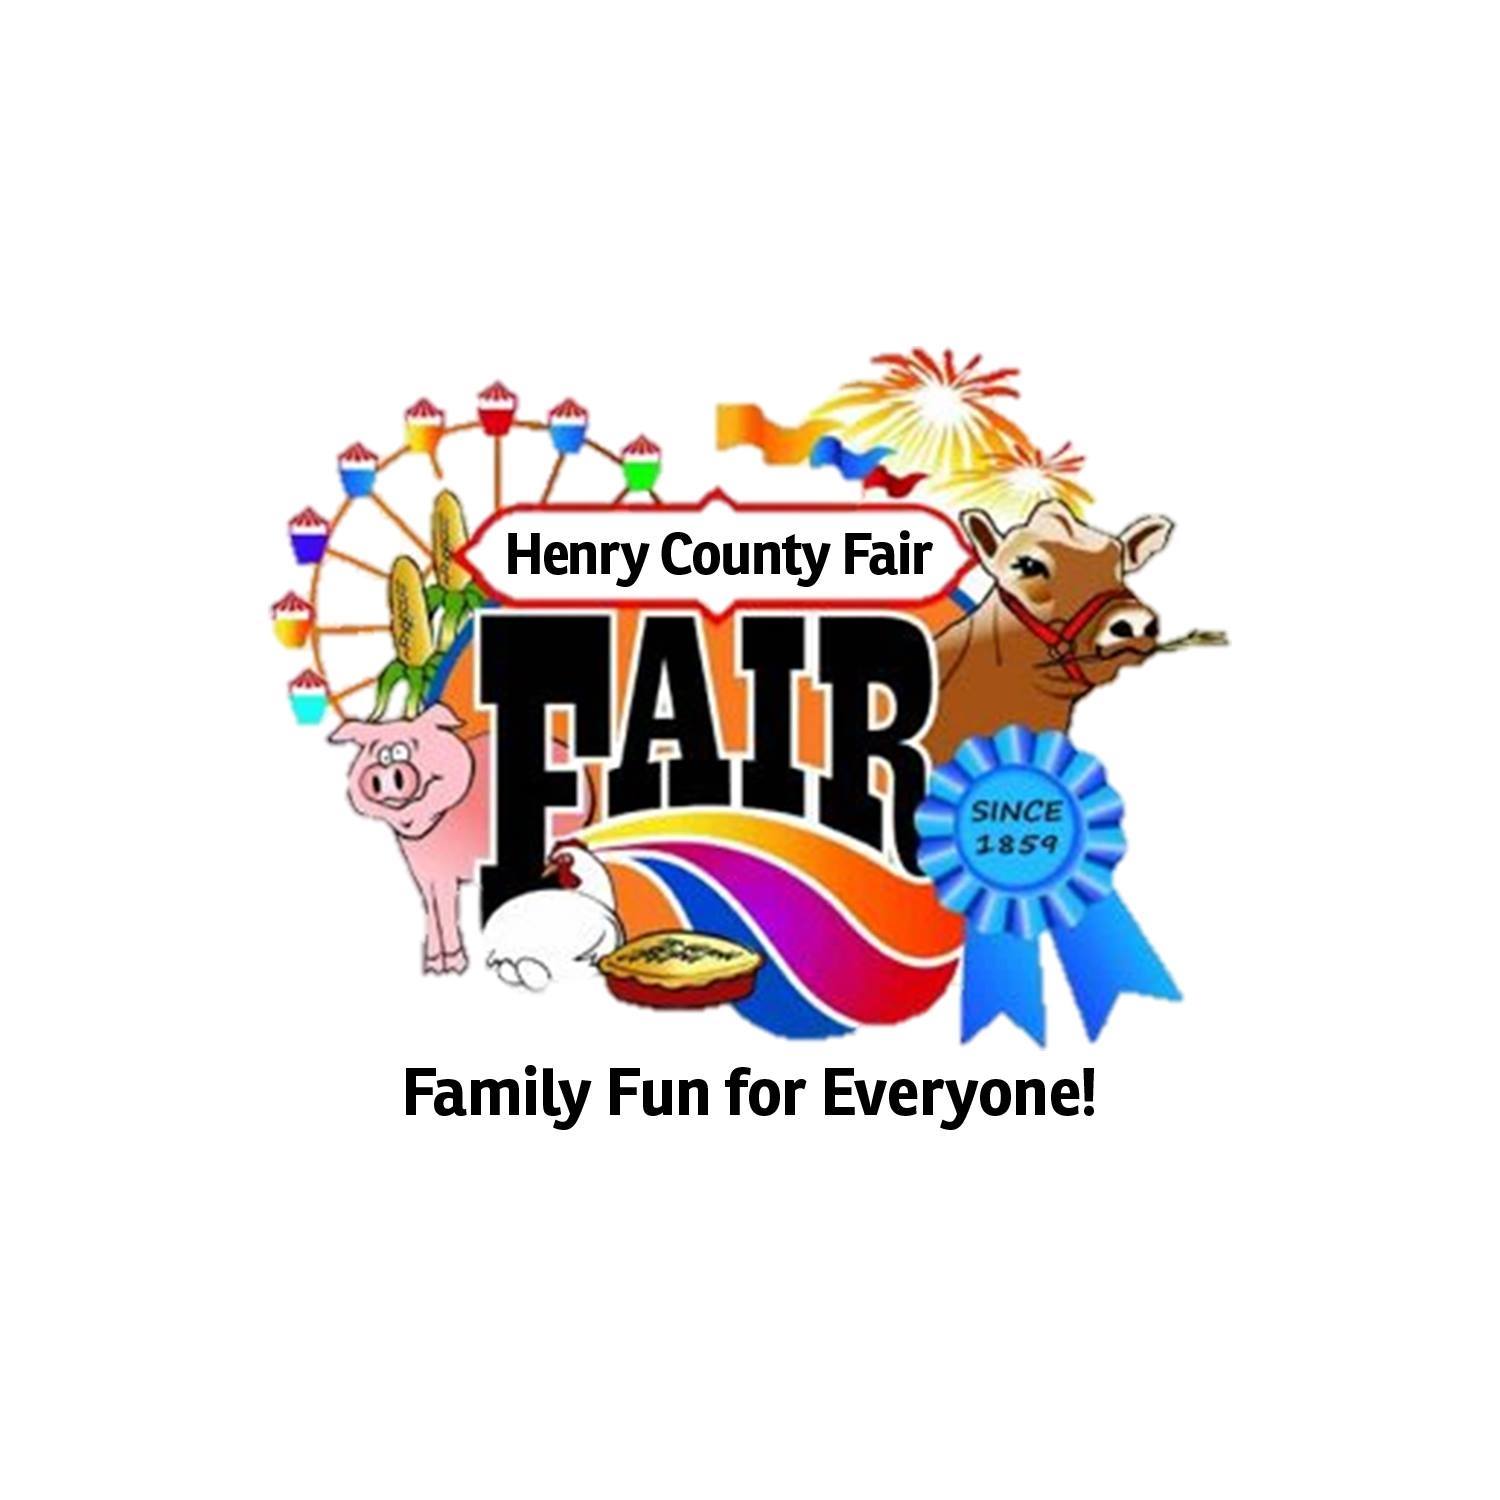 Henry County Fair 163rd year Tony